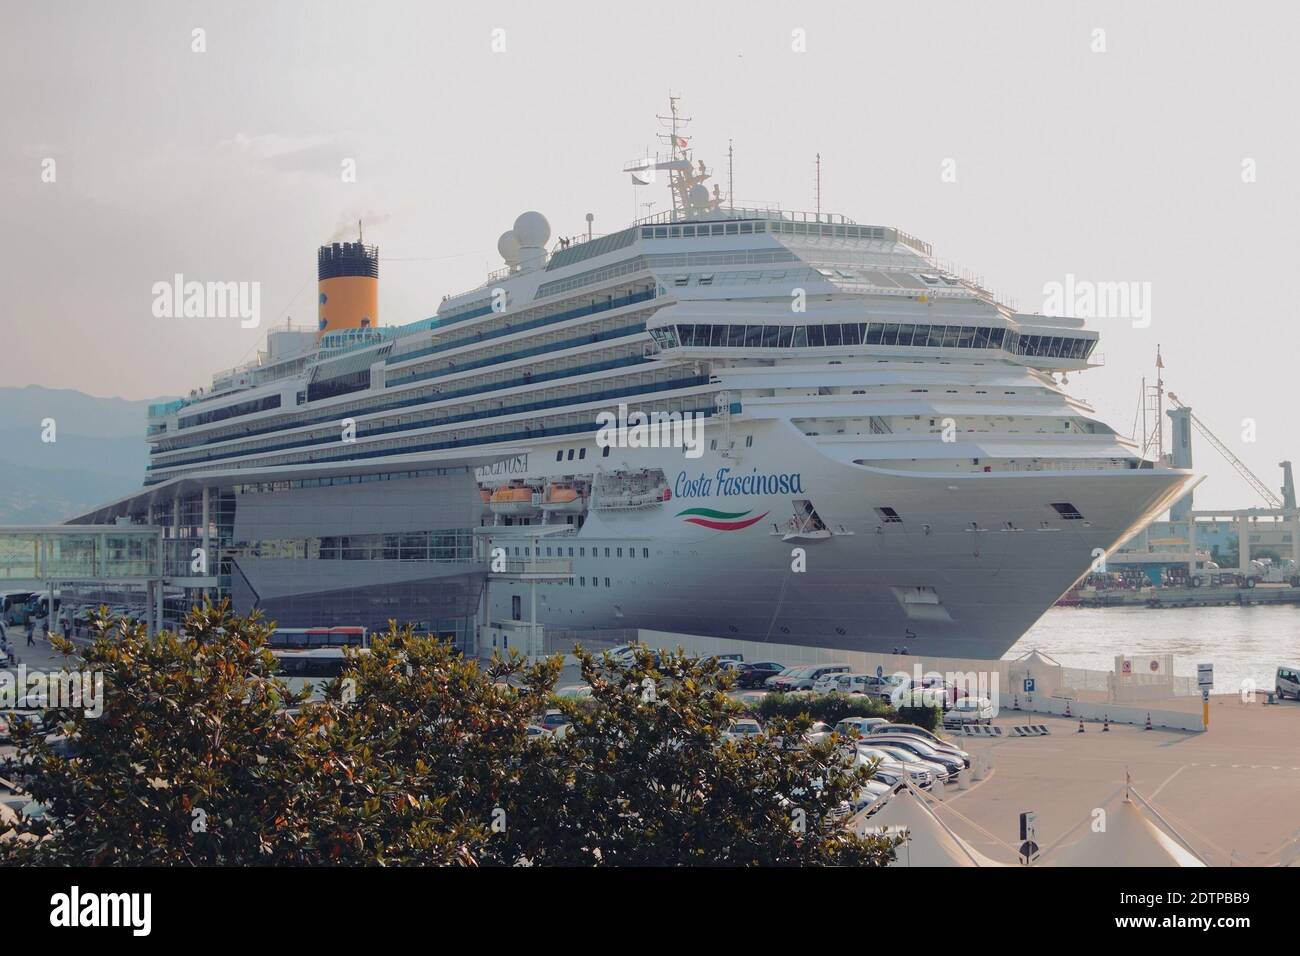 Savona, Italy - Jun 30, 2019: Cruise ship on mooring at port Stock Photo